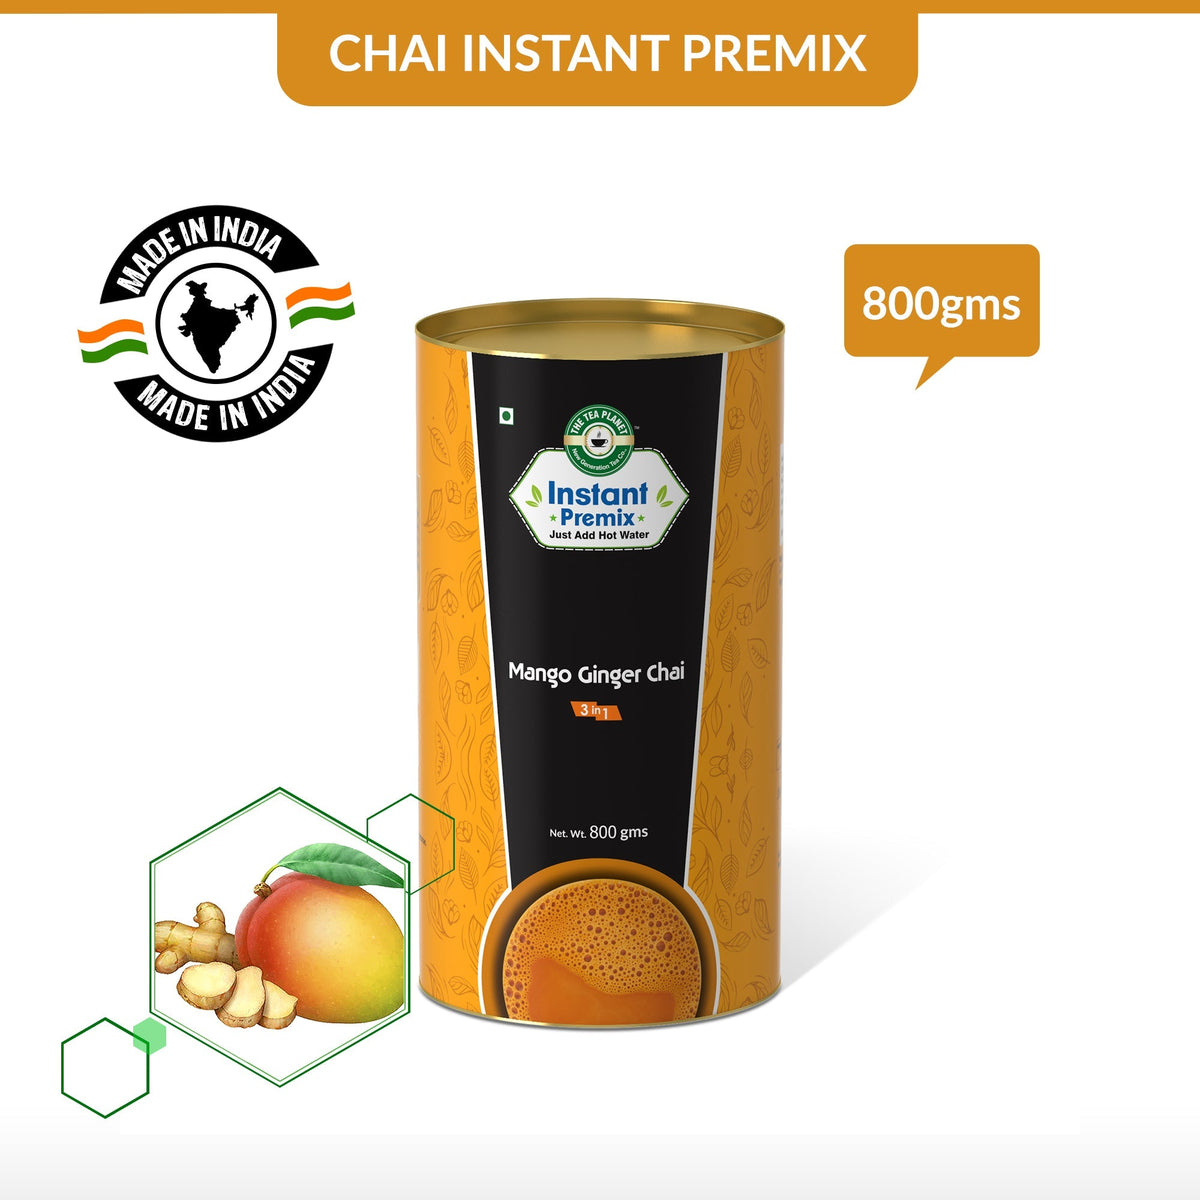 Mango Ginger Chai Premix (3 in 1) - 400 gms